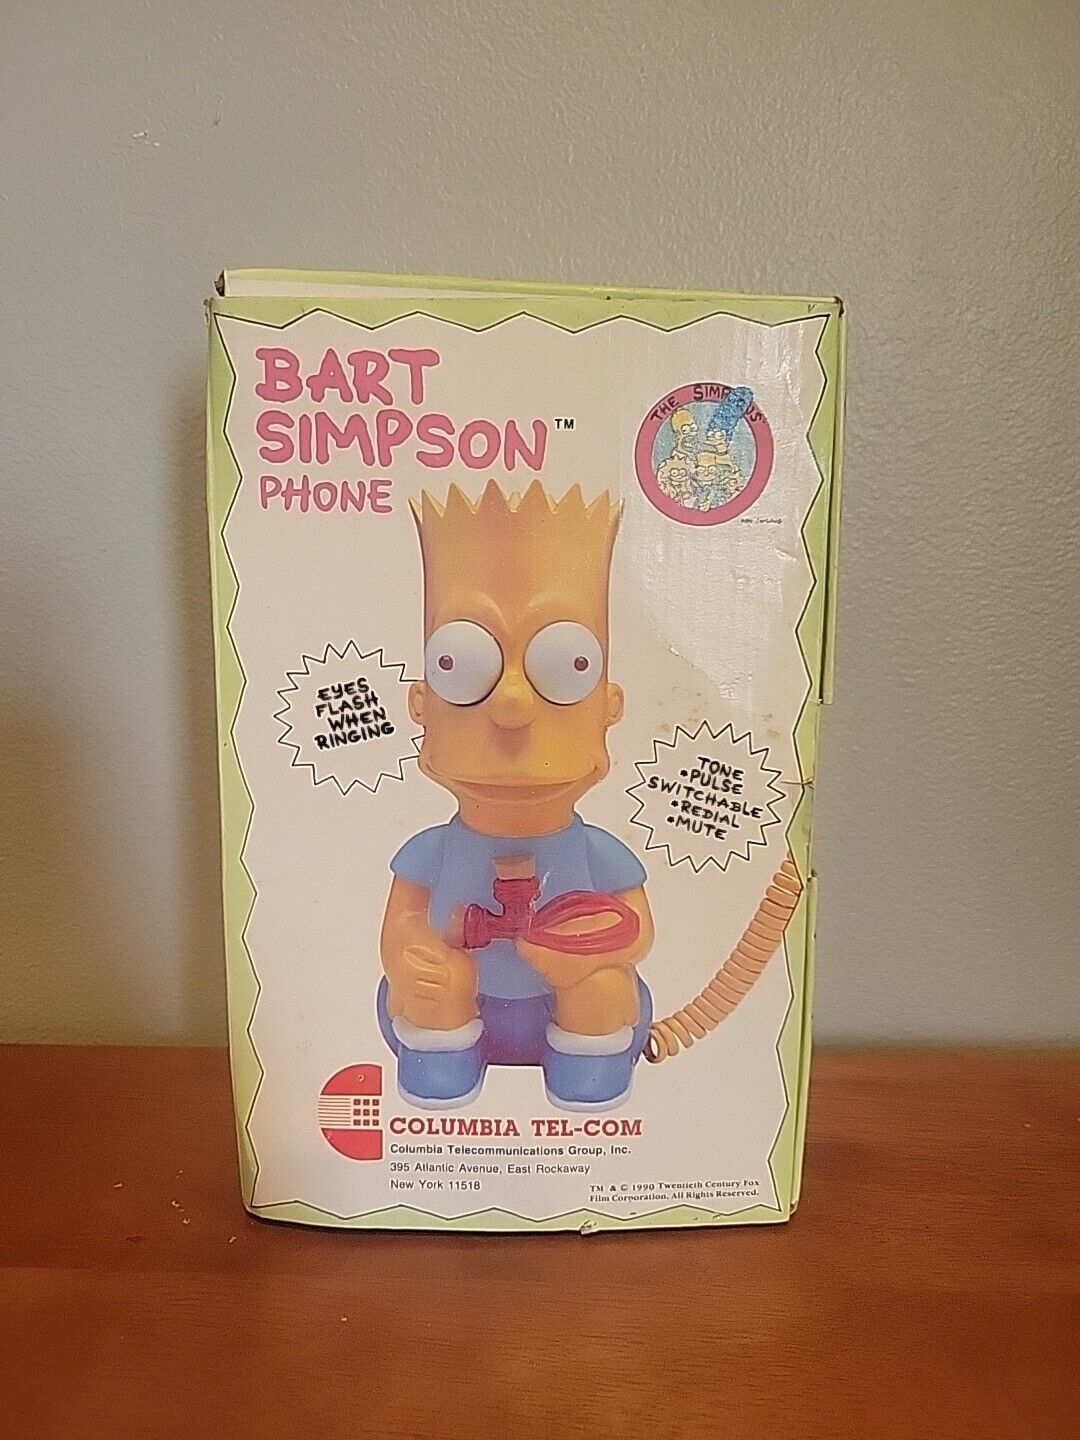 Vtg Bart Simpson Phone Corded Landline 1990 Columbia Tel-Com Telephone In Box